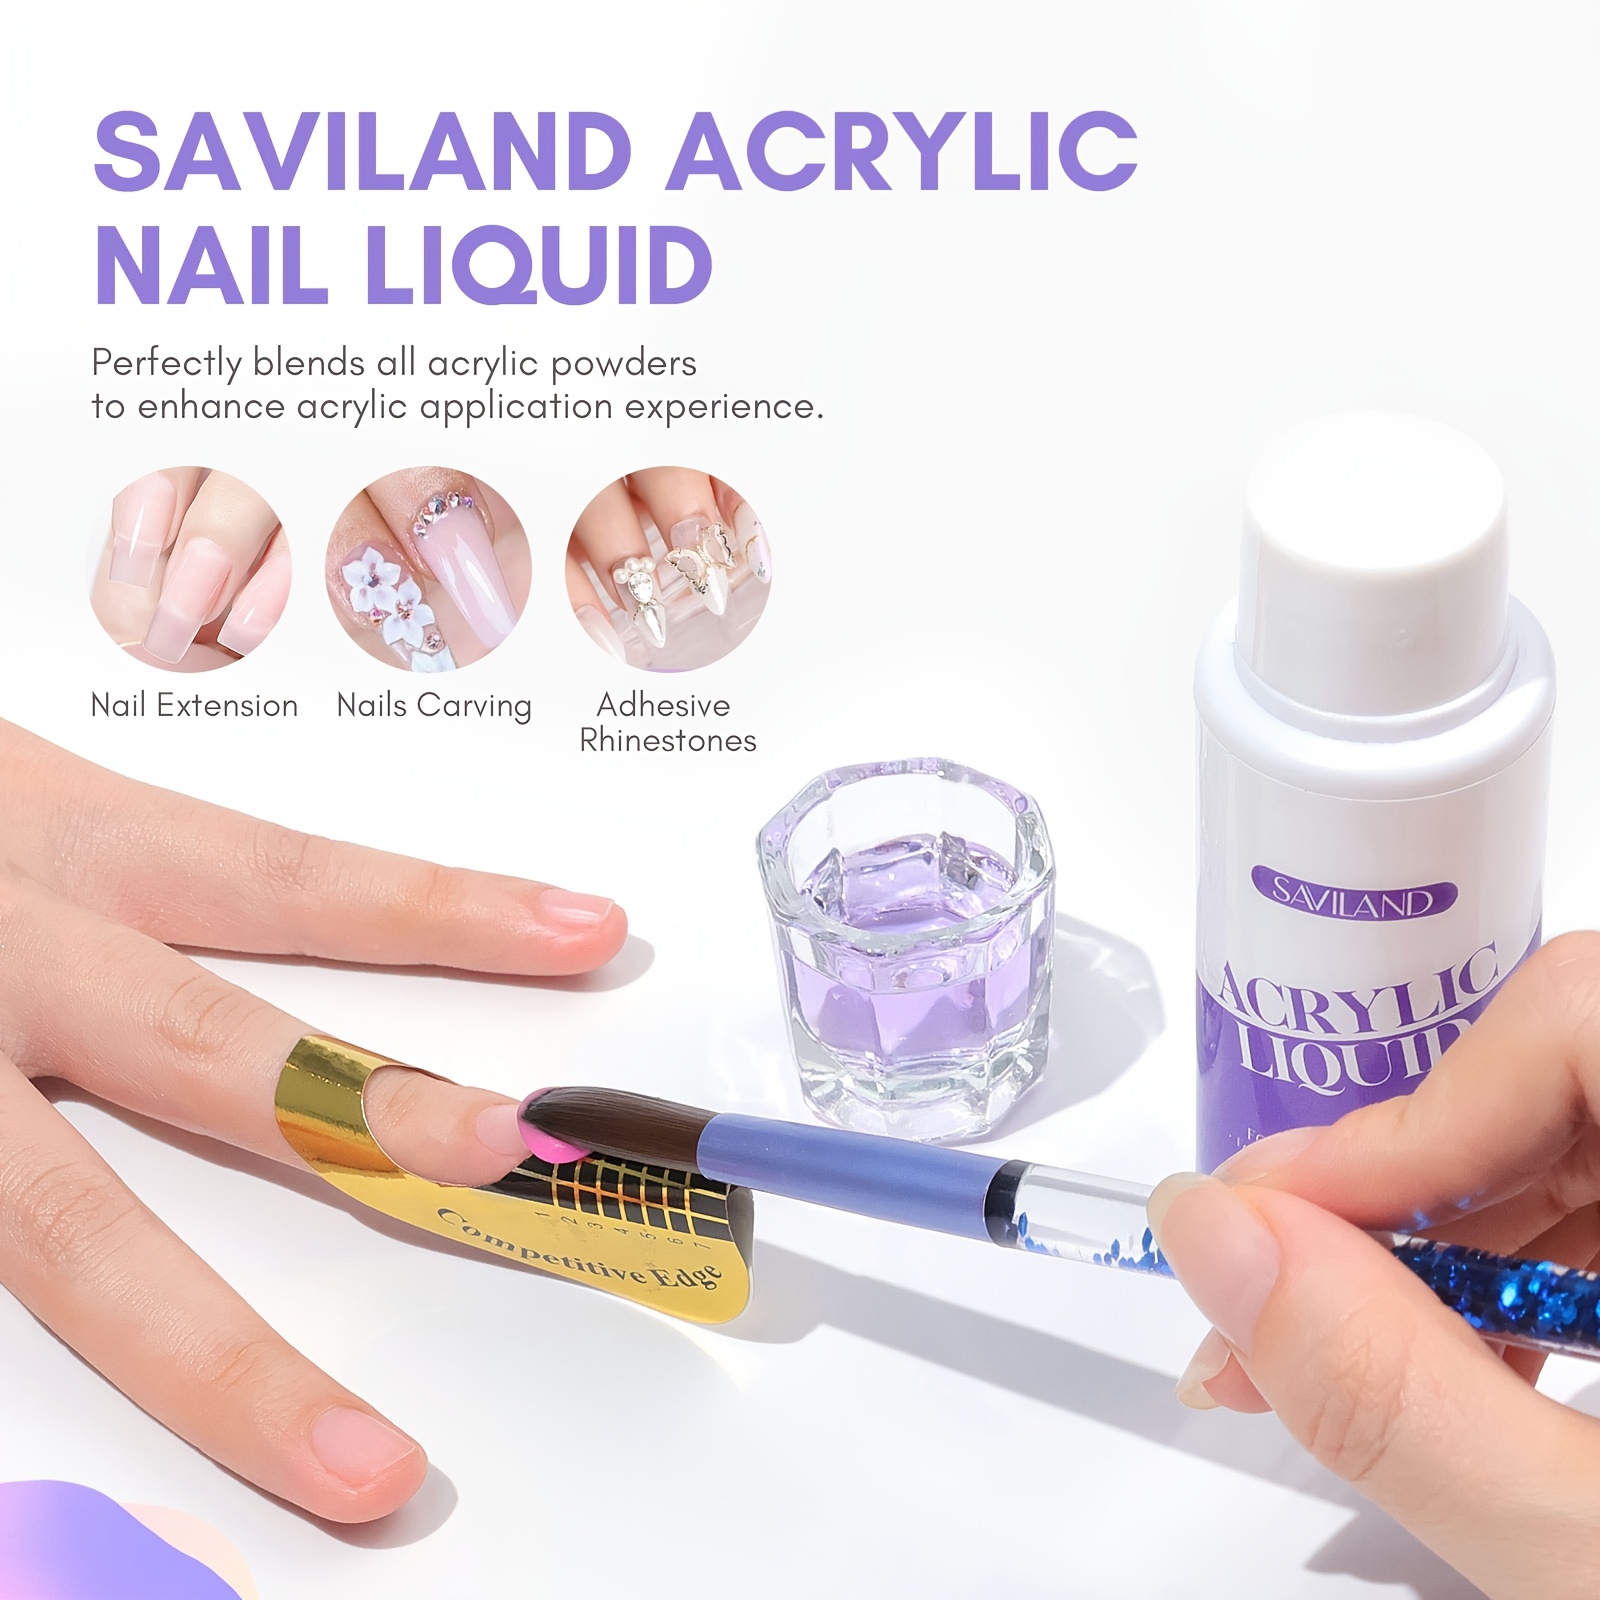 Saviland Acrylic Nail Brush Size 8 - Nail Brushes For Acrylic Application  With Acrylic Powder And Liquid Nail Supplies Acrylic Brushes For Nails  Extension & Carving Home DIY